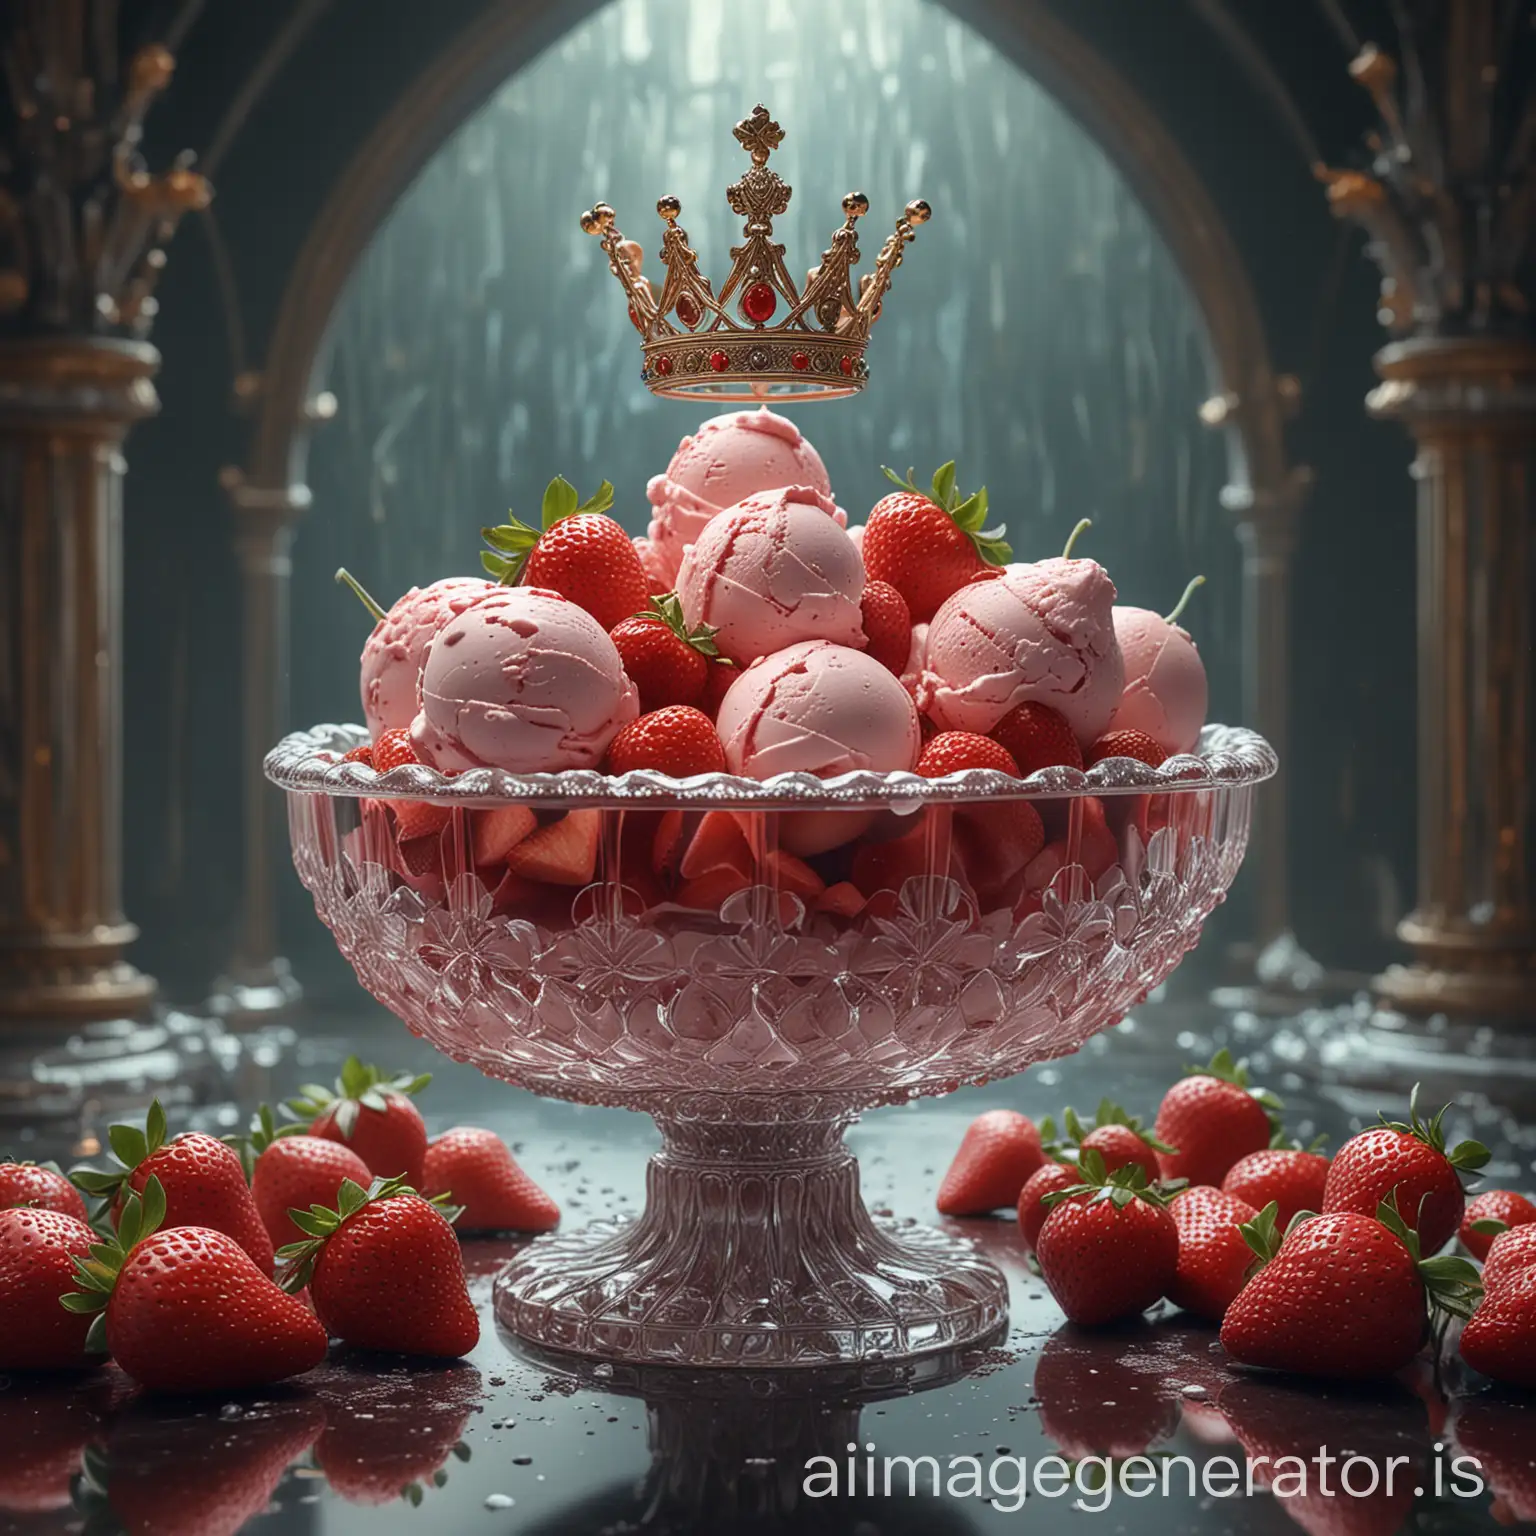 Epic-Royal-Strawberry-Ice-Cream-Fantasy-Robotic-Nature-and-Regal-Splendor